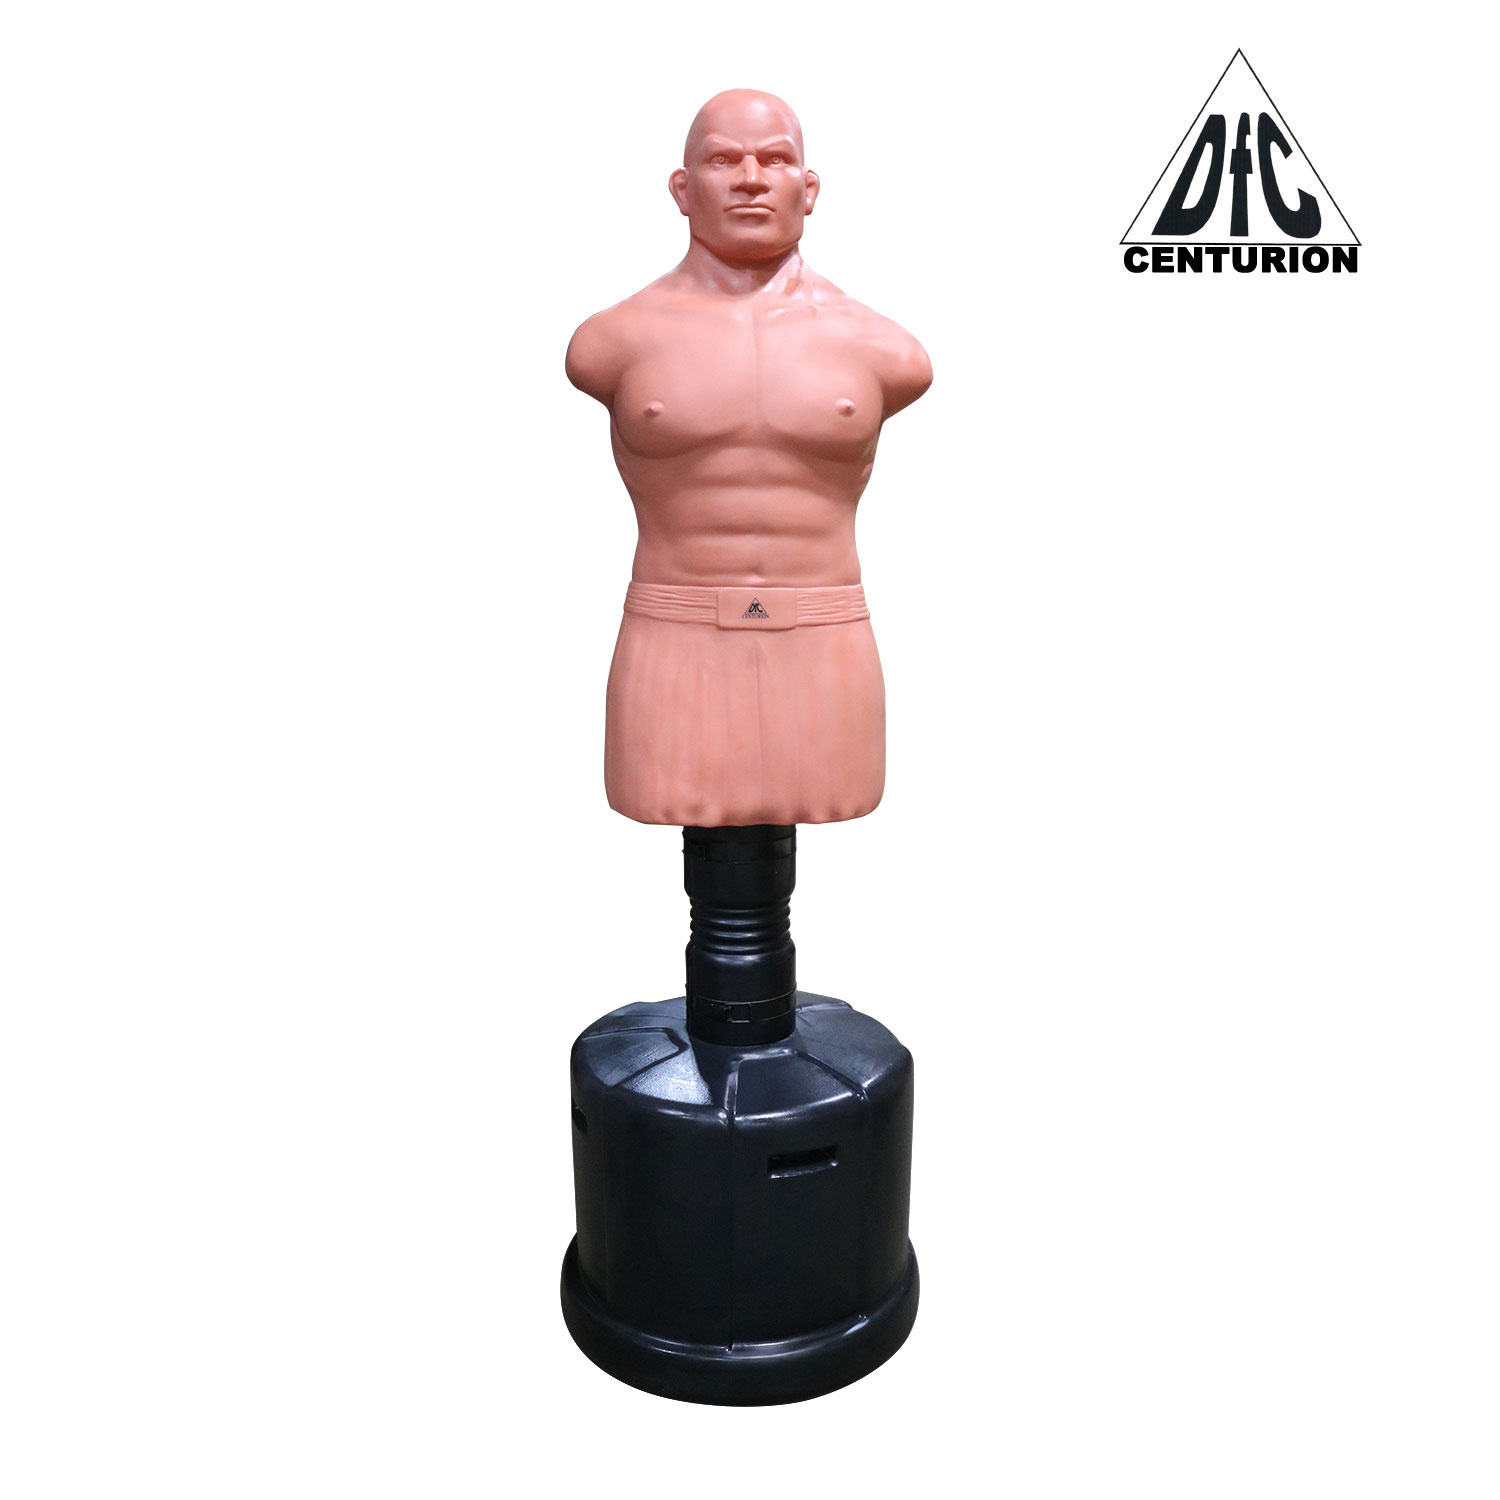 DFC Centurion Boxing Punching Man-Heavy водоналивной - бежевый из каталога манекенов для бокса в Казани по цене 45990 ₽